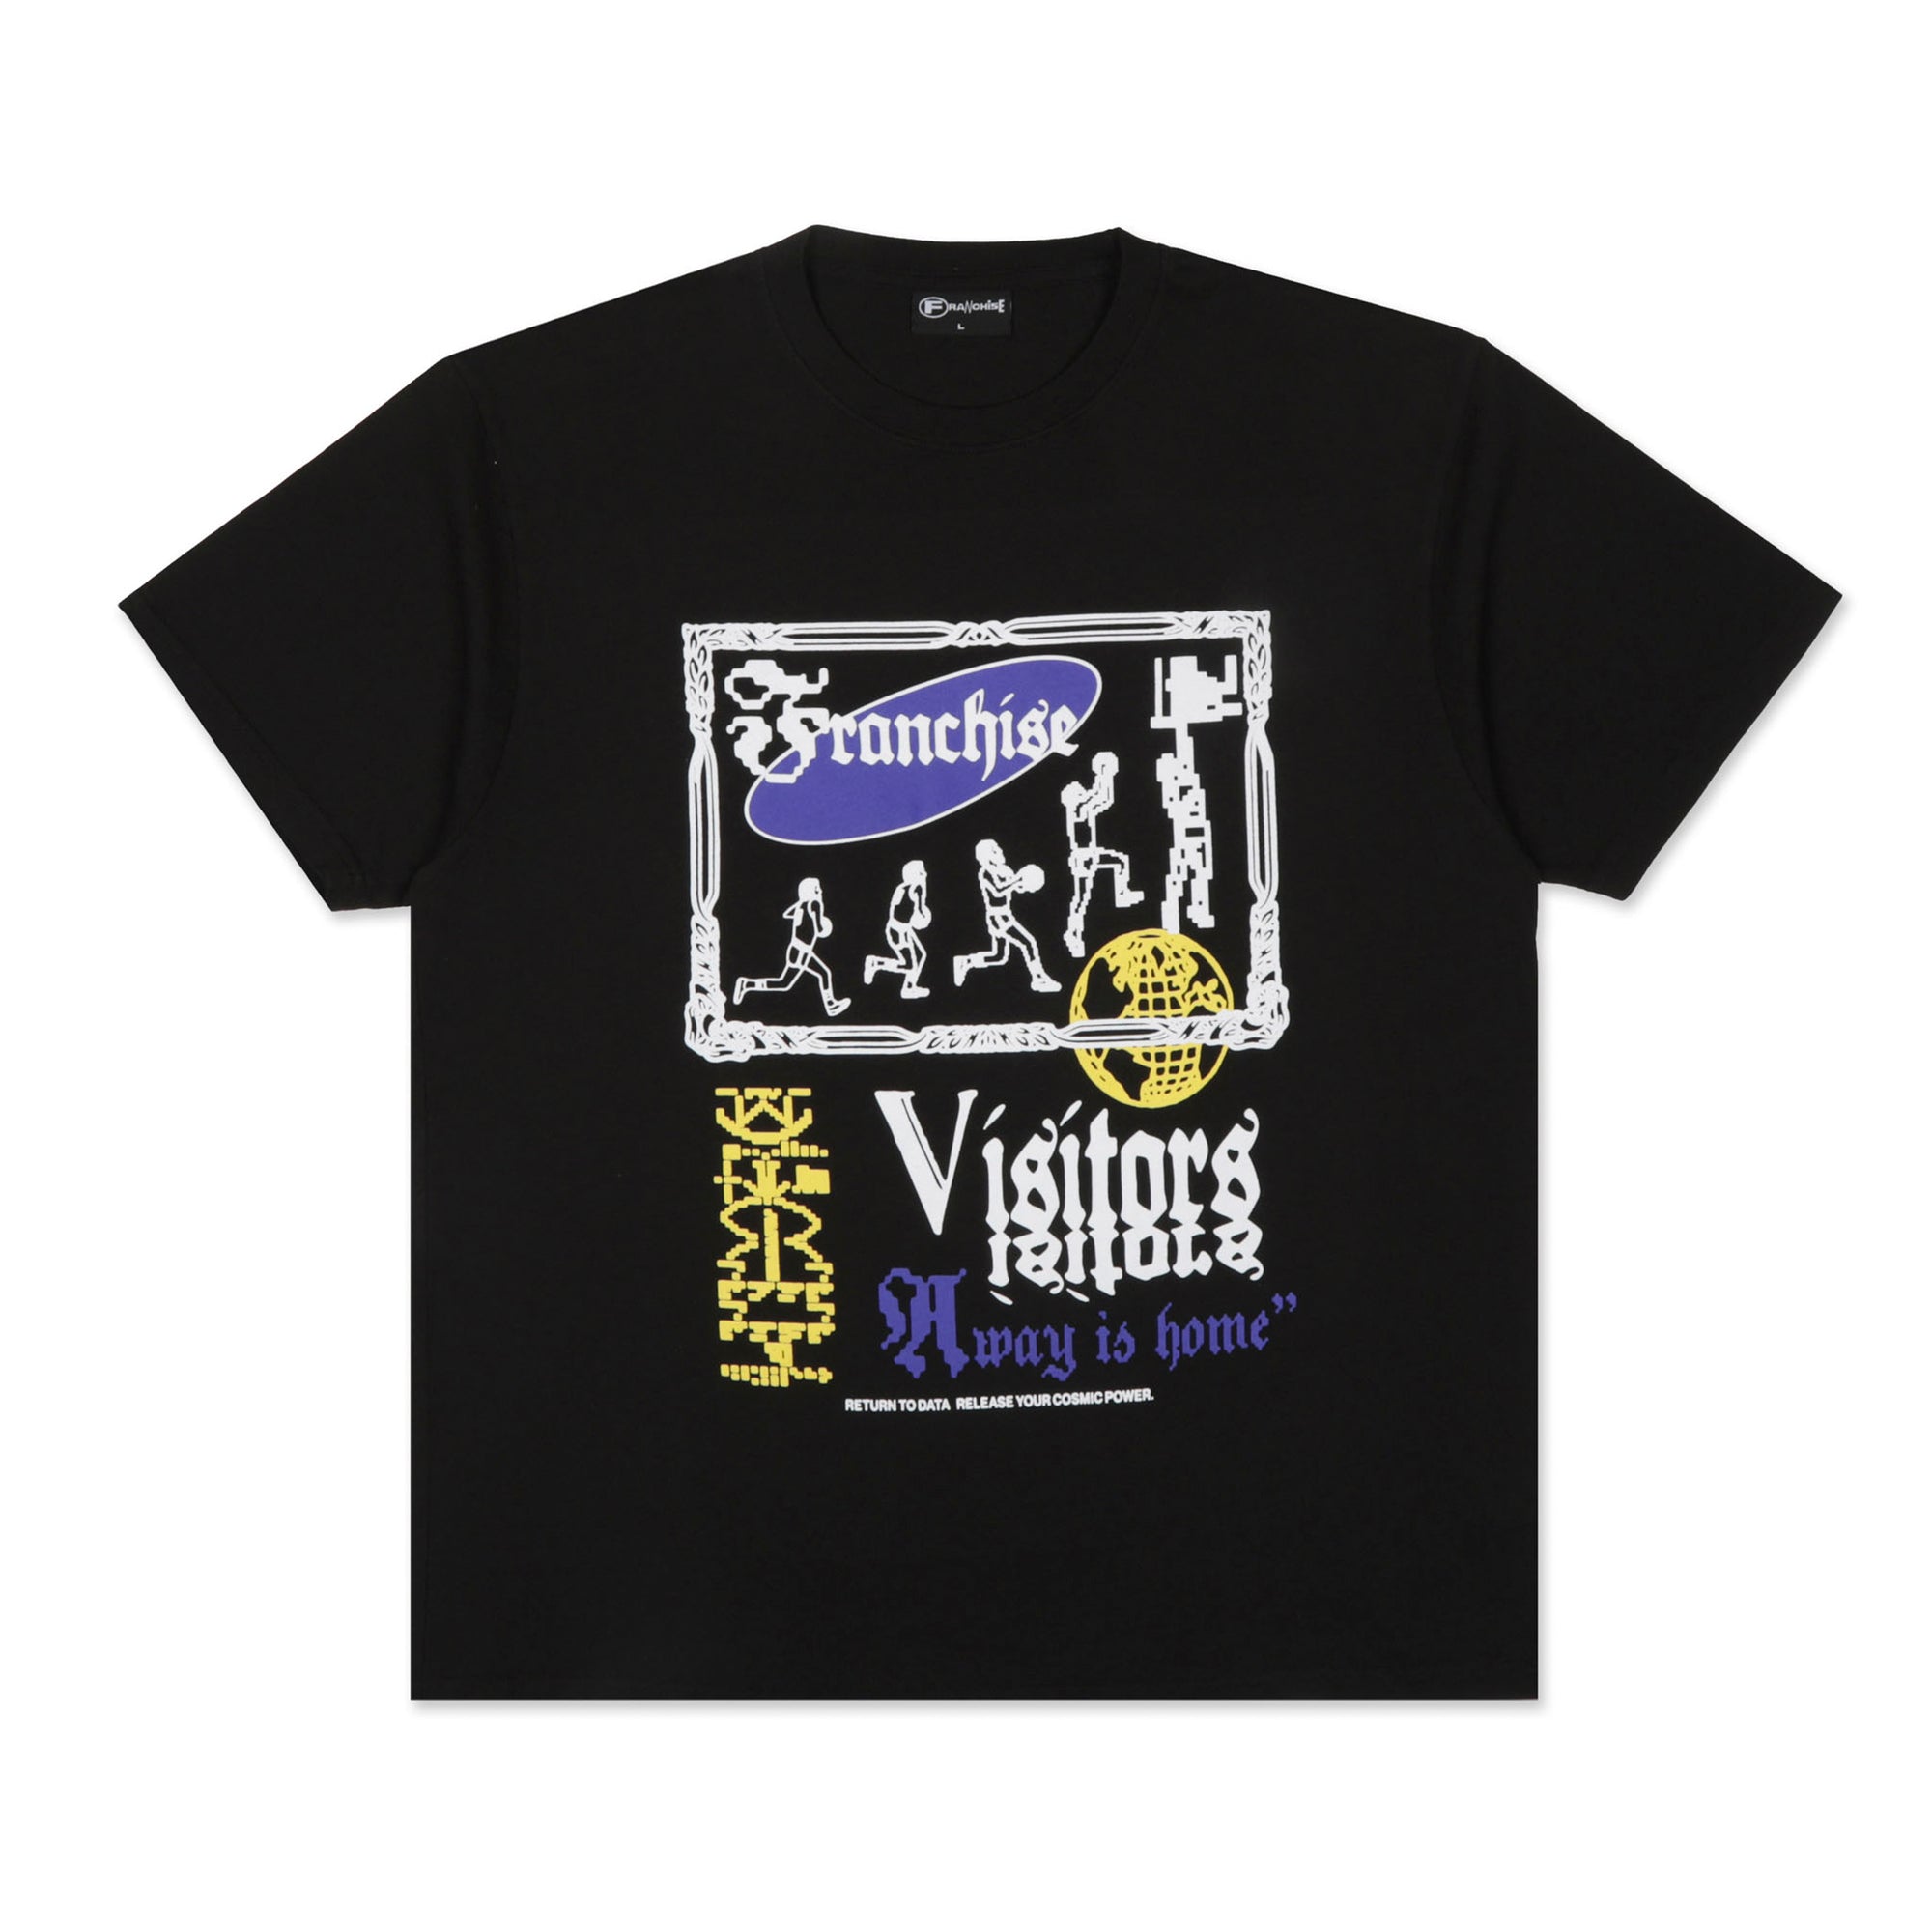 FRANCHISE - Vr Short Sleeve T-Shirt - (Black) view 1